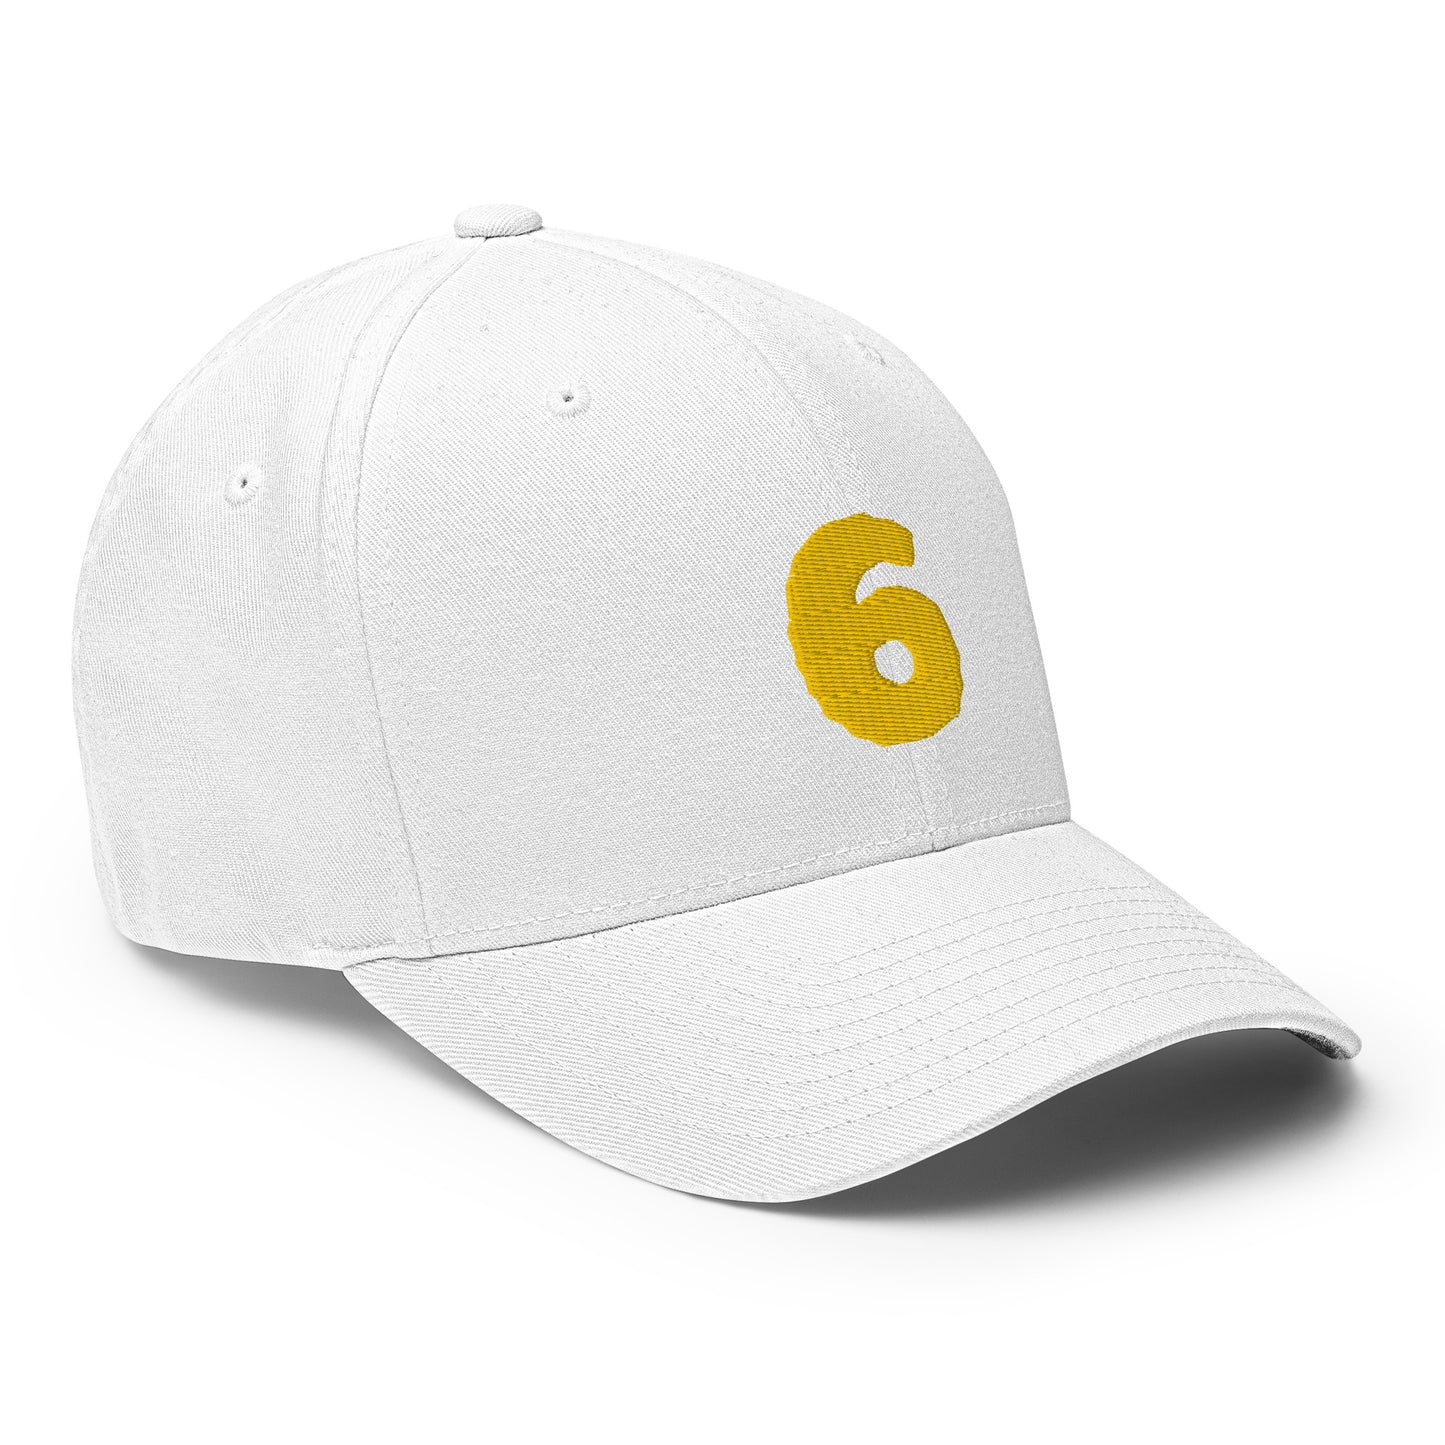 Baseball Cap with Number 6 Six Symbol